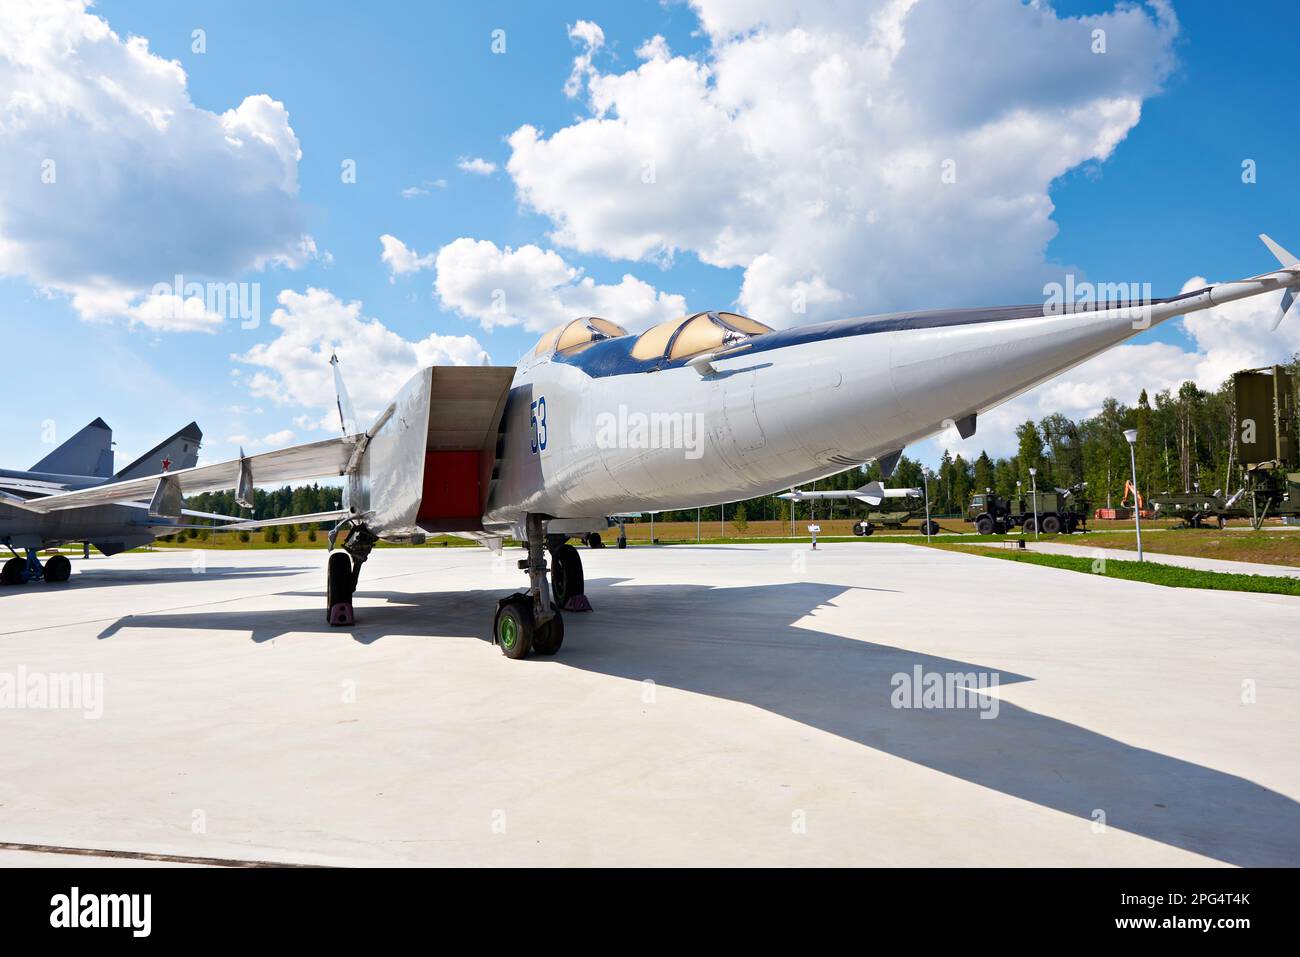 MiG-25 Foxbat russian supersonic interceptor and reconnaissance aircraft Stock Photo